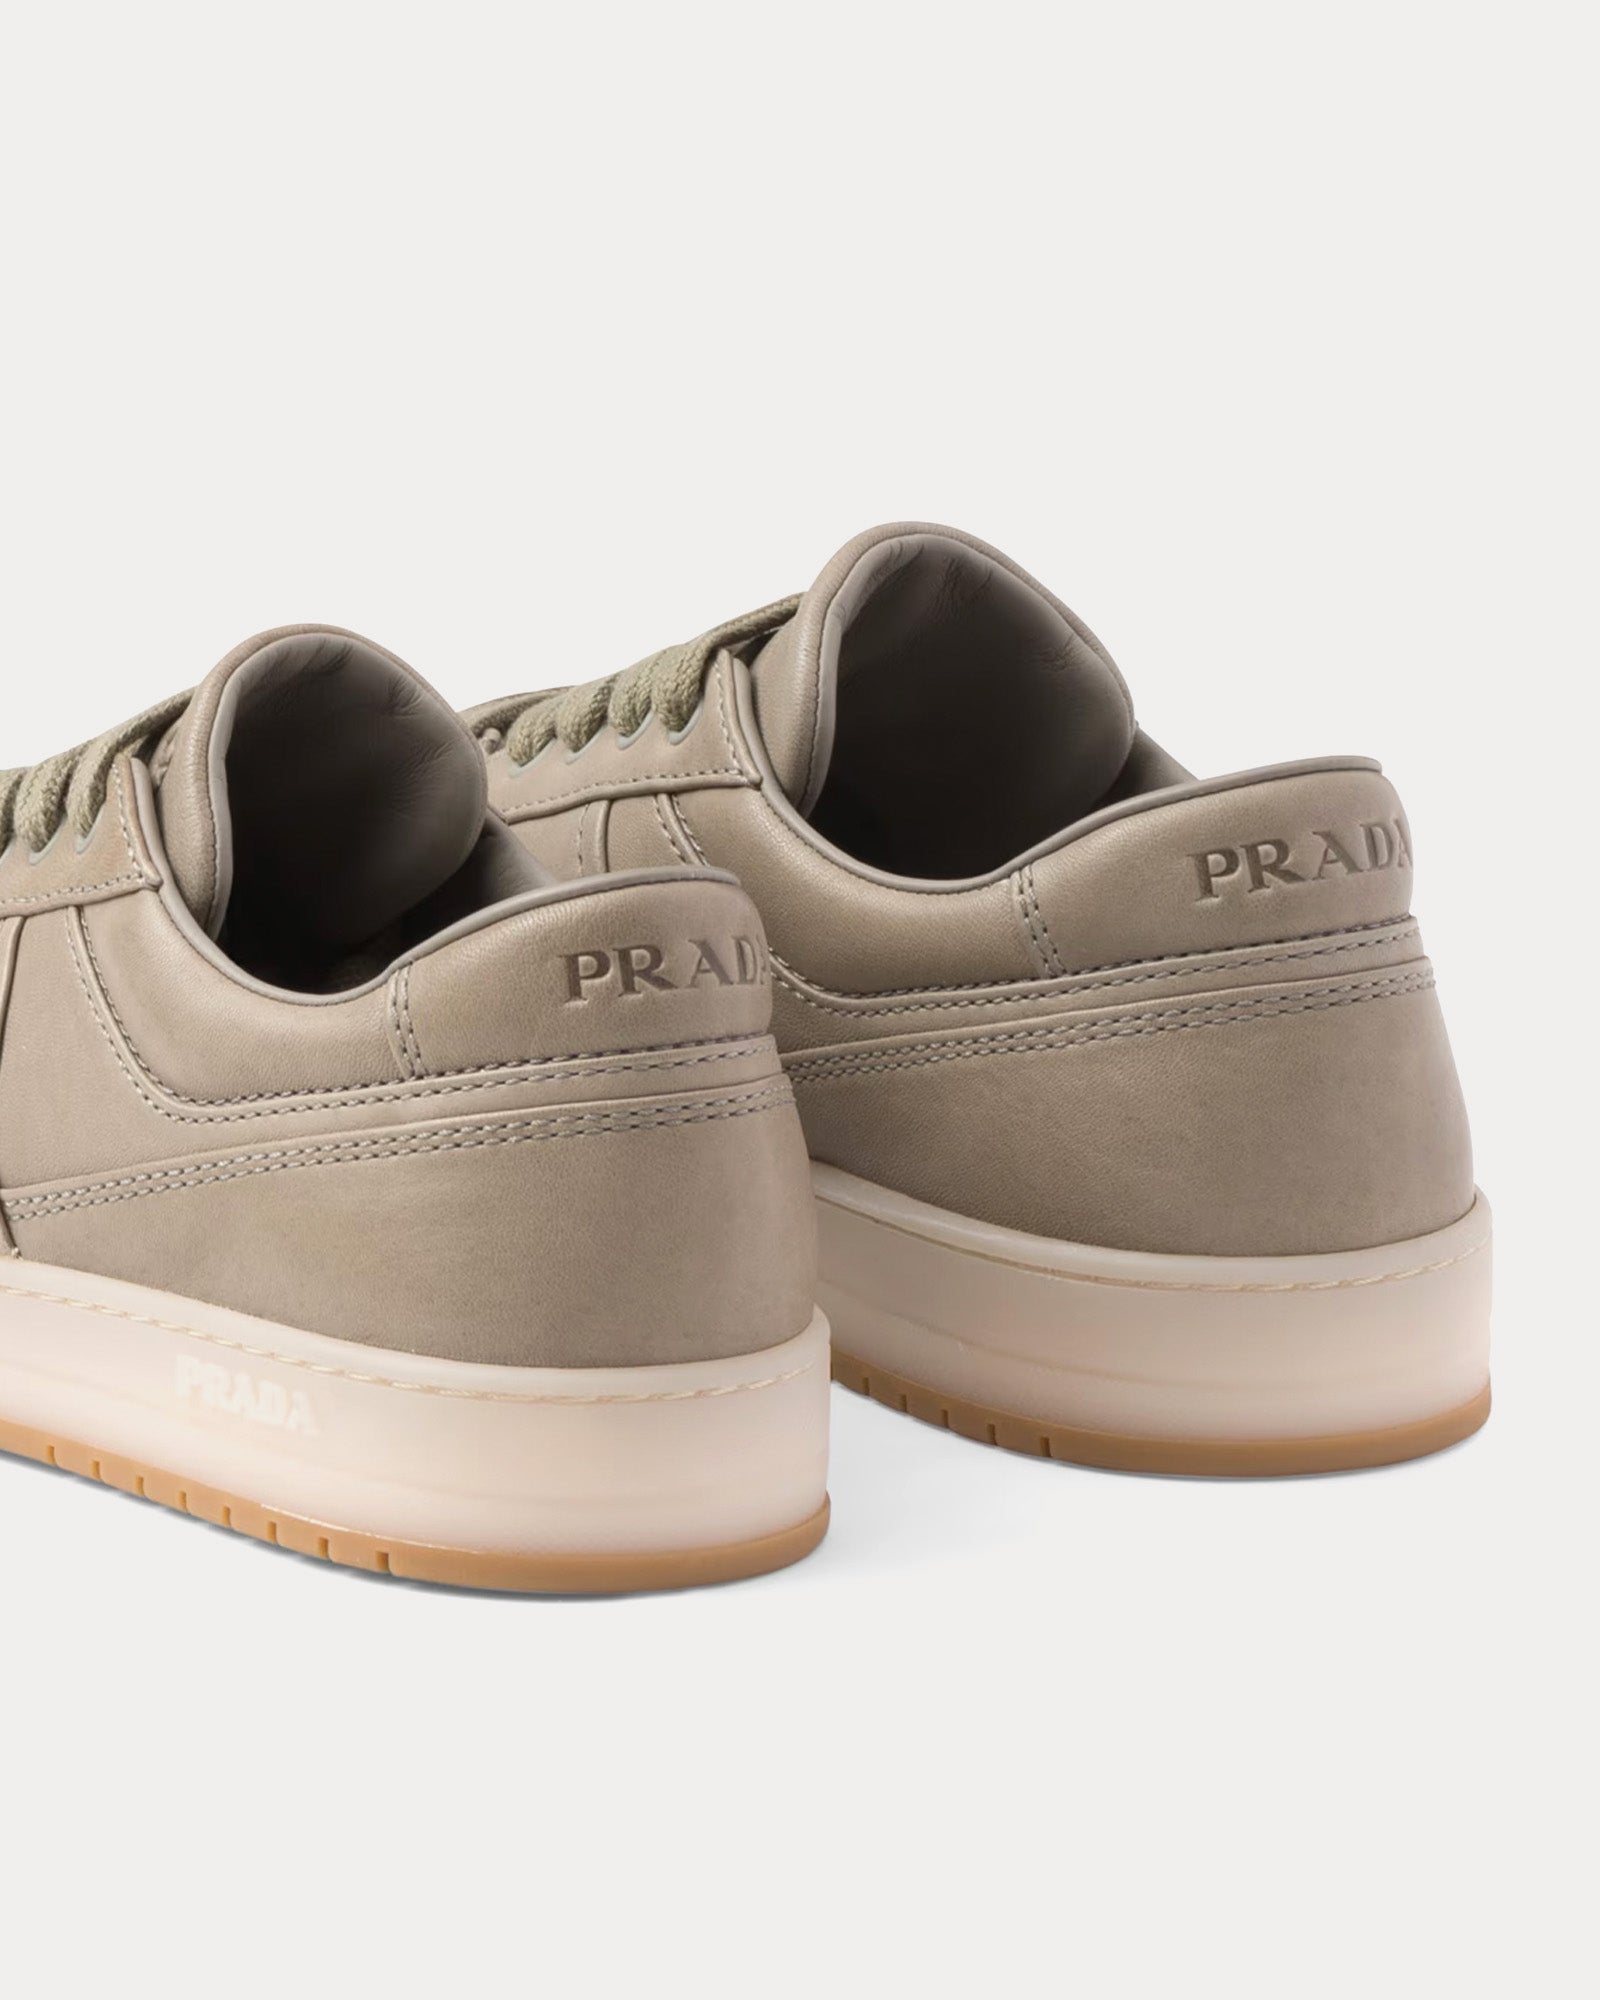 Prada - Downtown Nappa Leather Chrome Low Top Sneakers